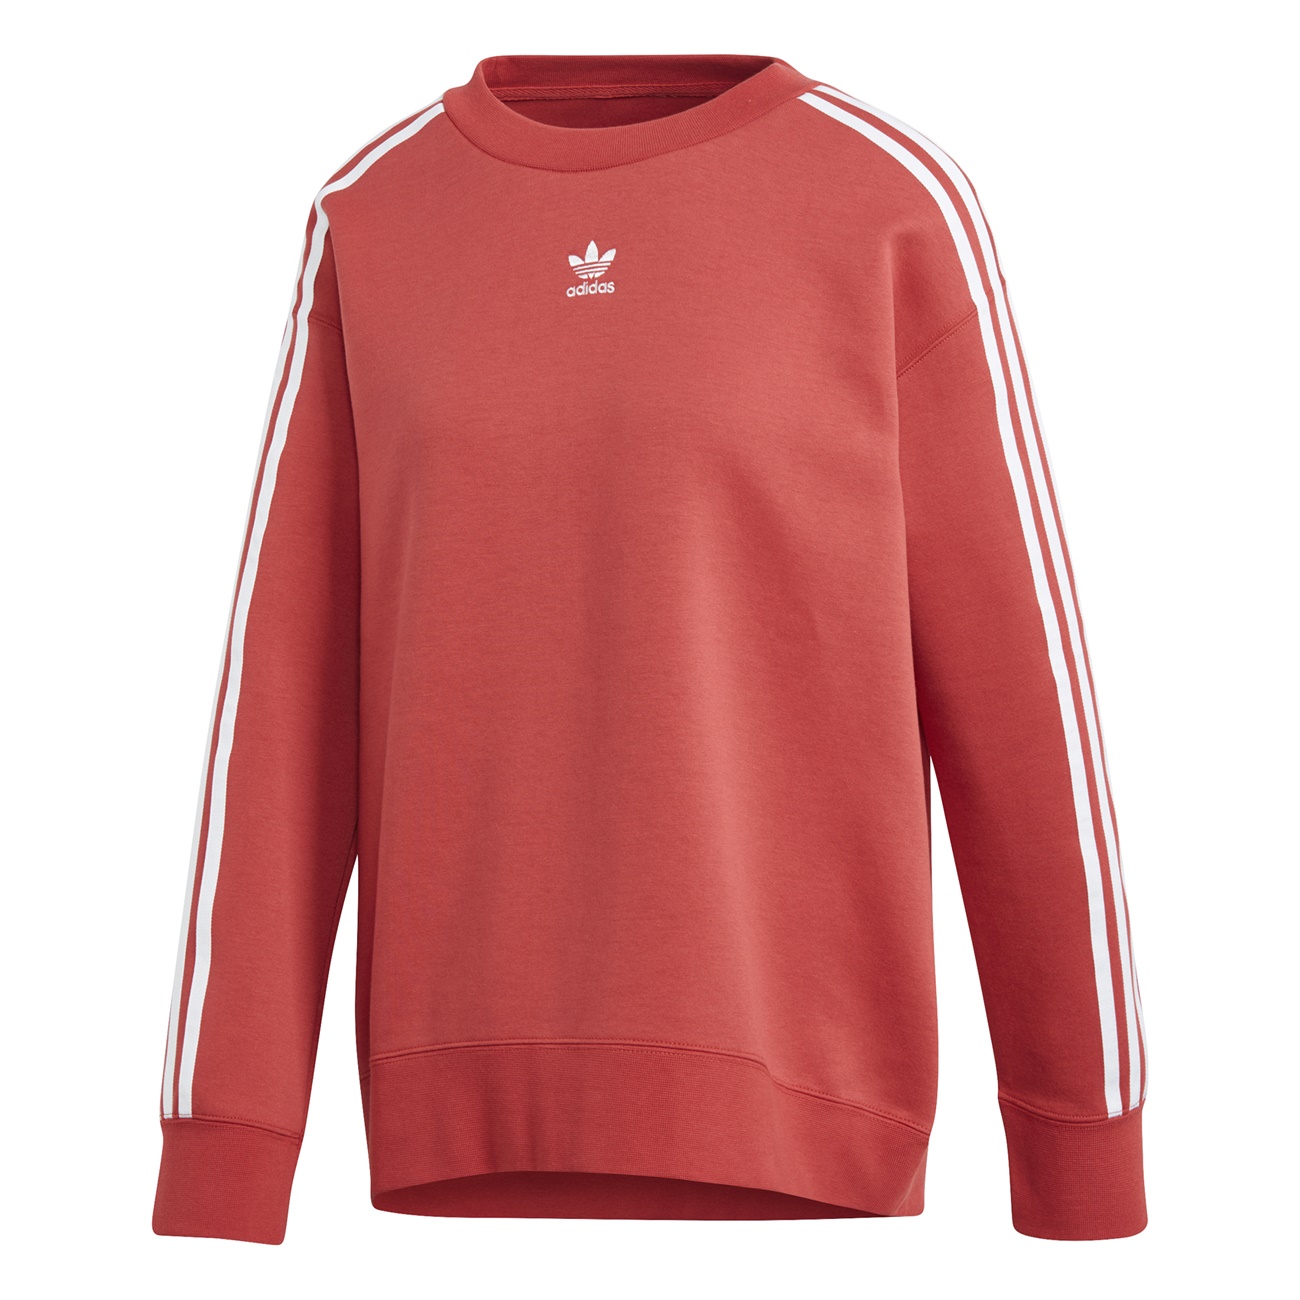 Adidas Originals Crew Sweater W (Raw Red) - manelsanchez.pt